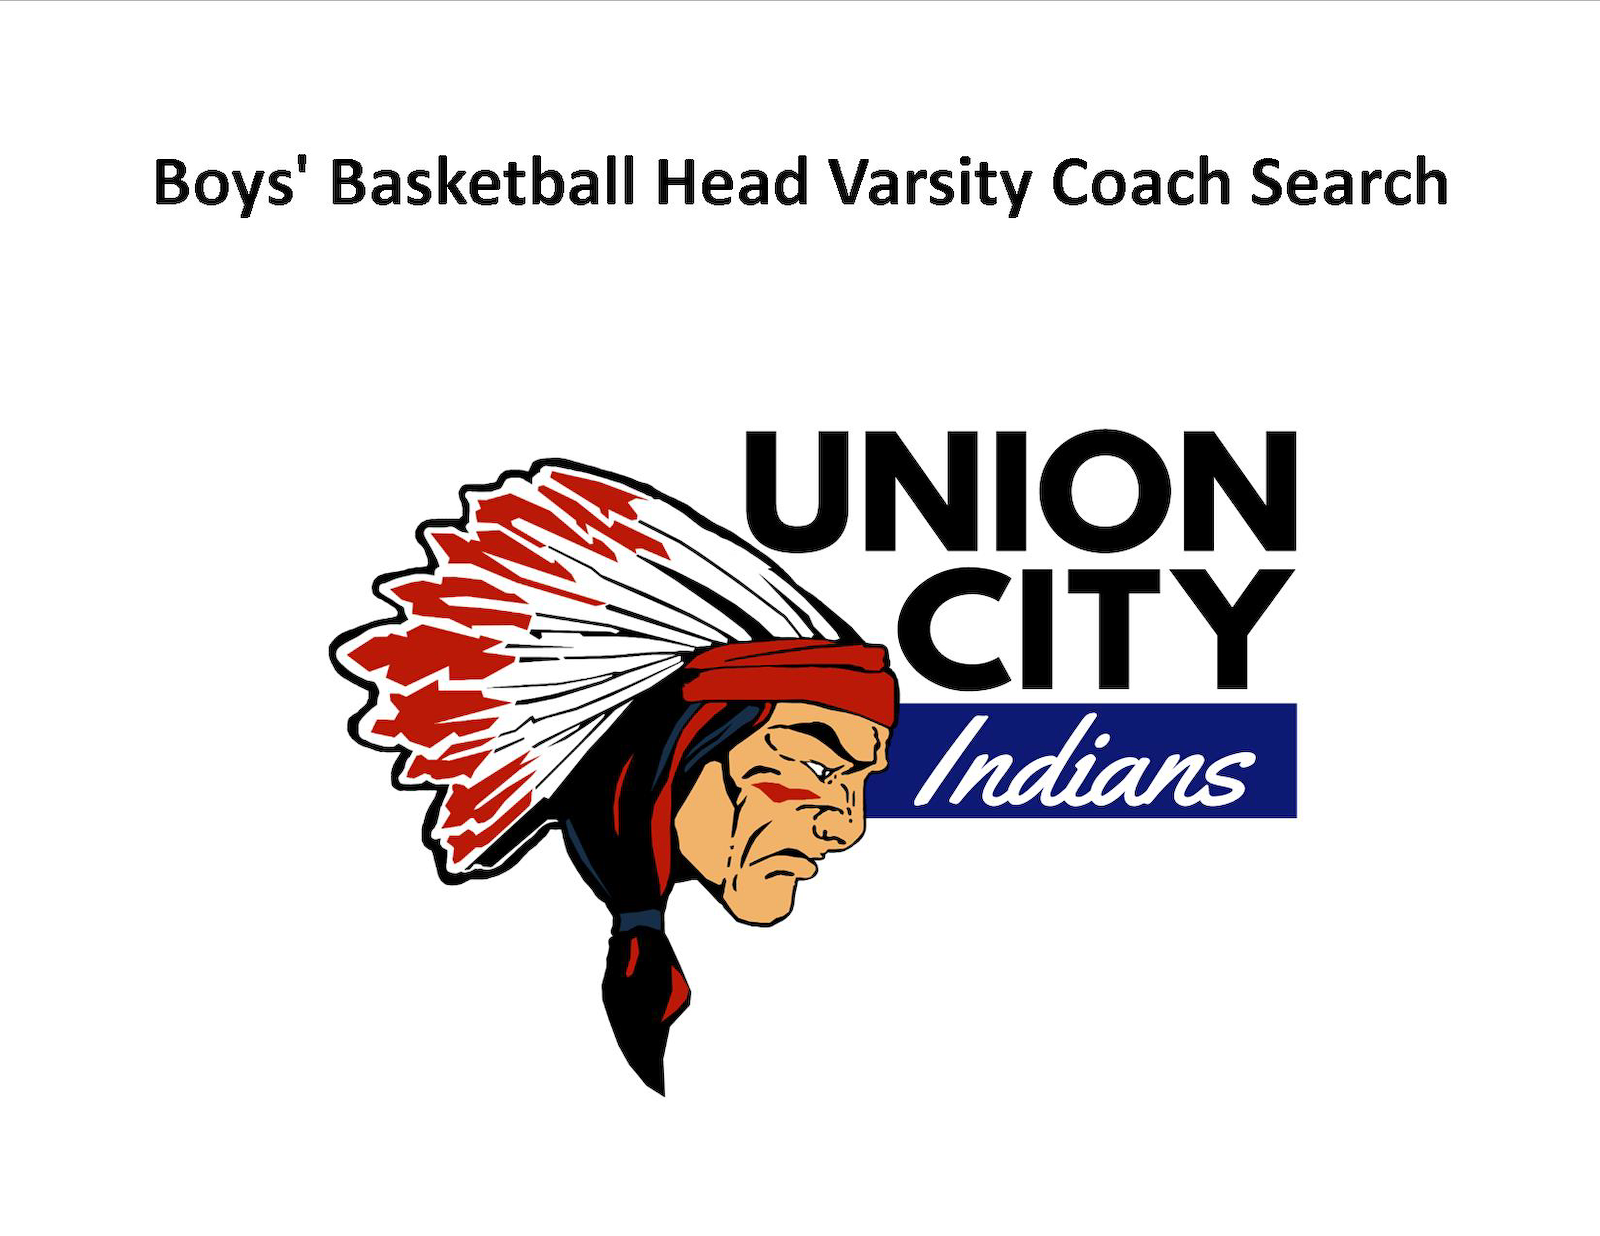 Boys' Basketball Head Varsity Coach Search cover photo